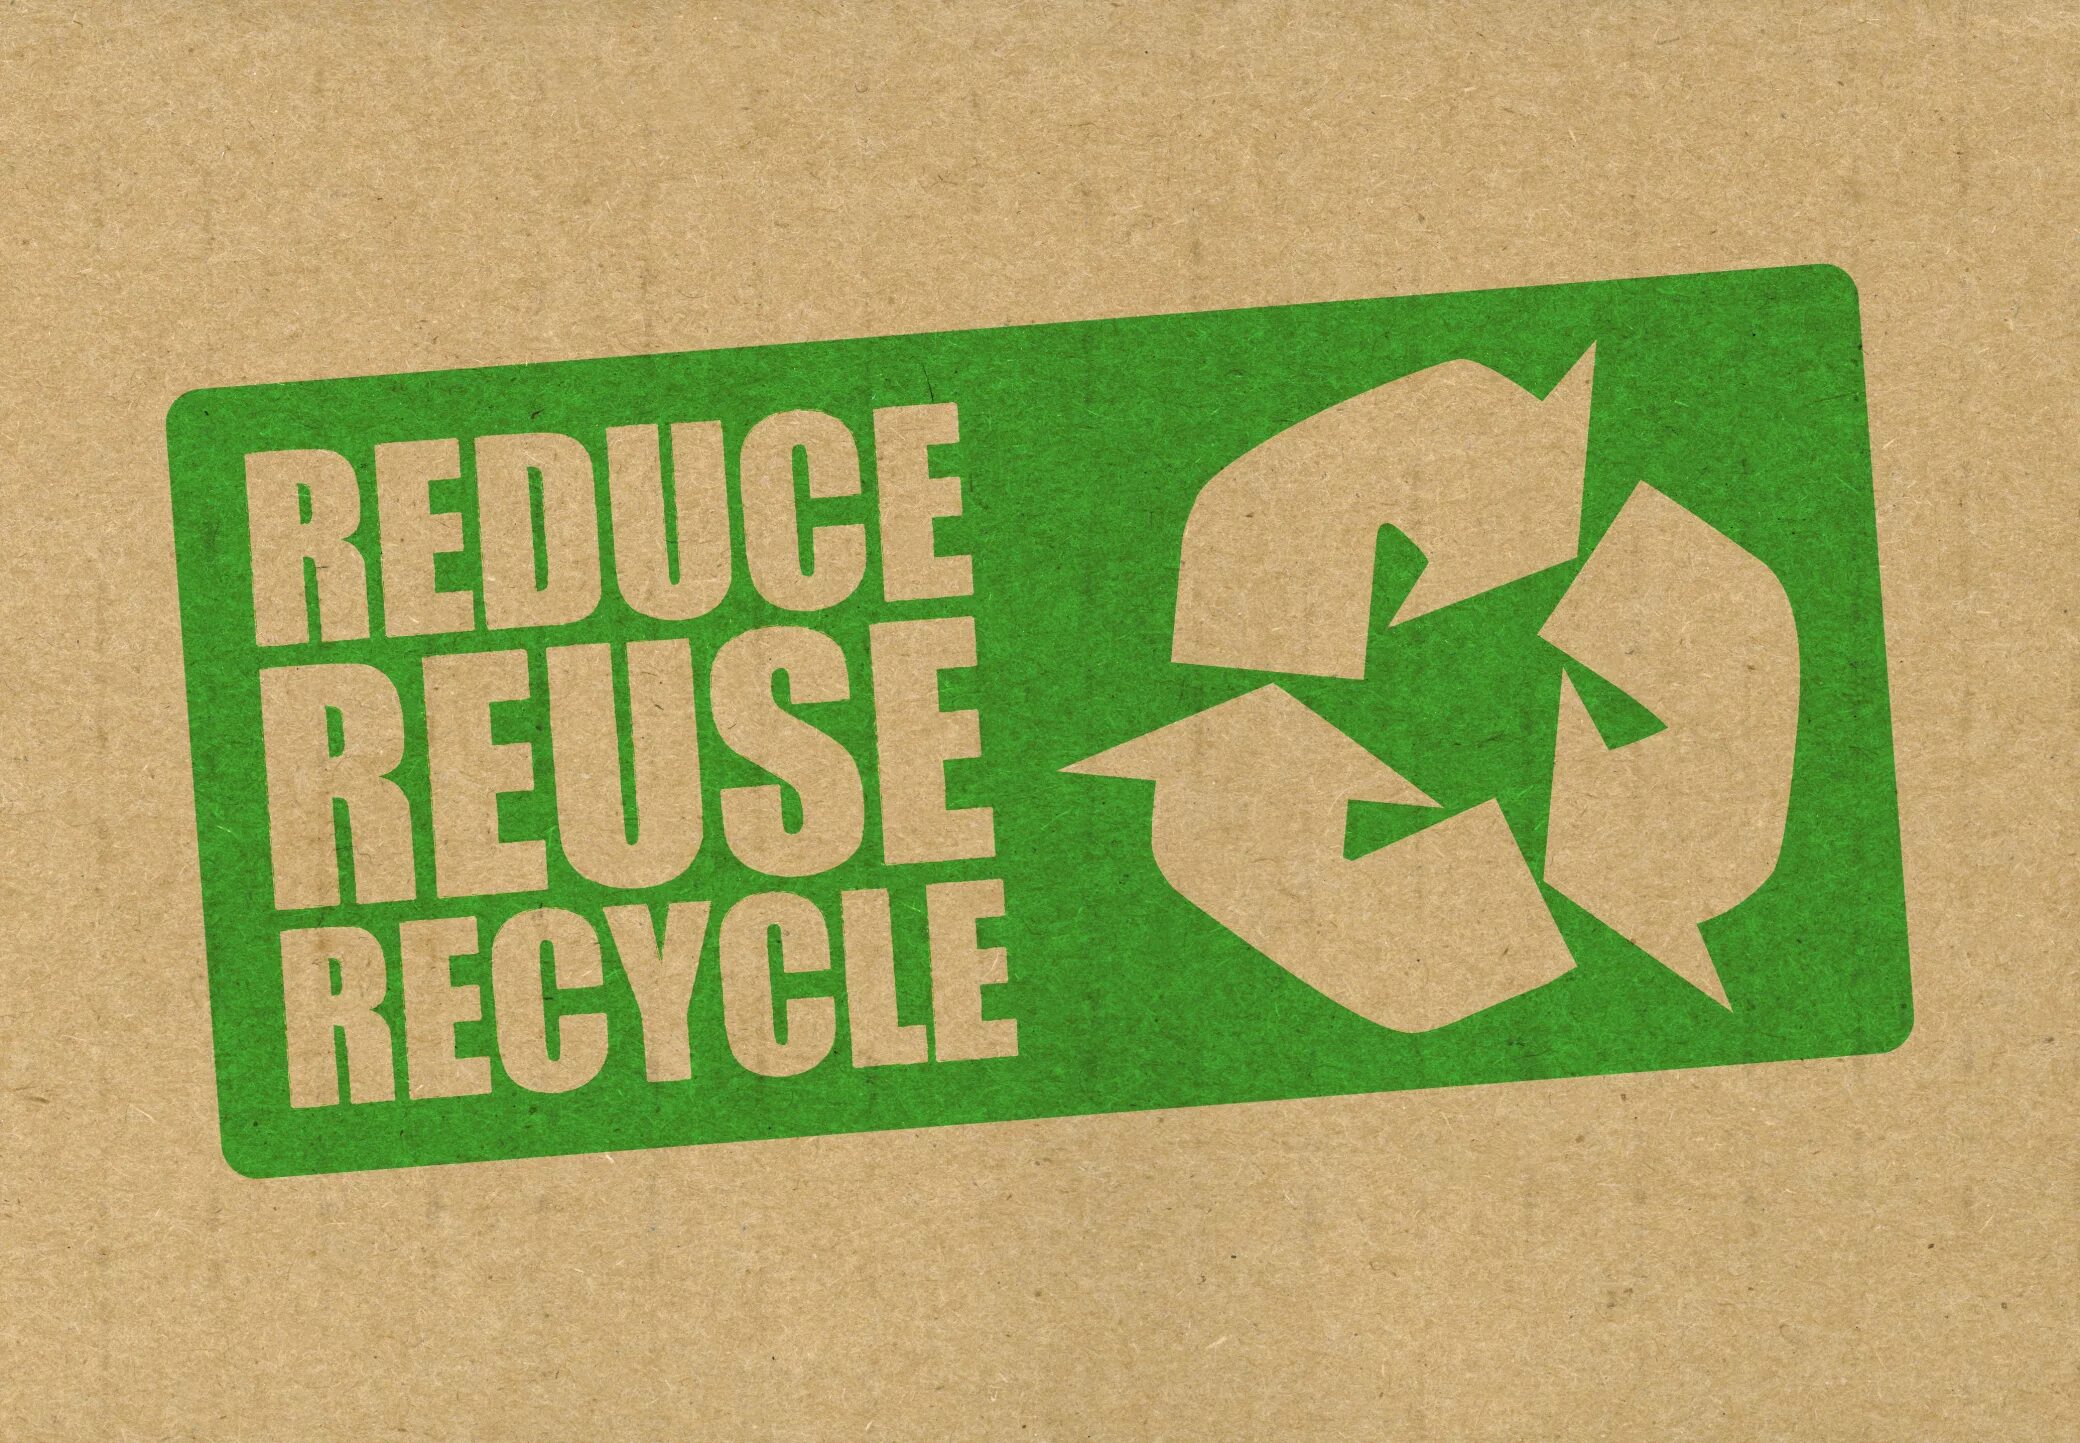 Reduce reuse recycle. Reduce экология. Recycling reuse. Знак reduce reuse recycle.